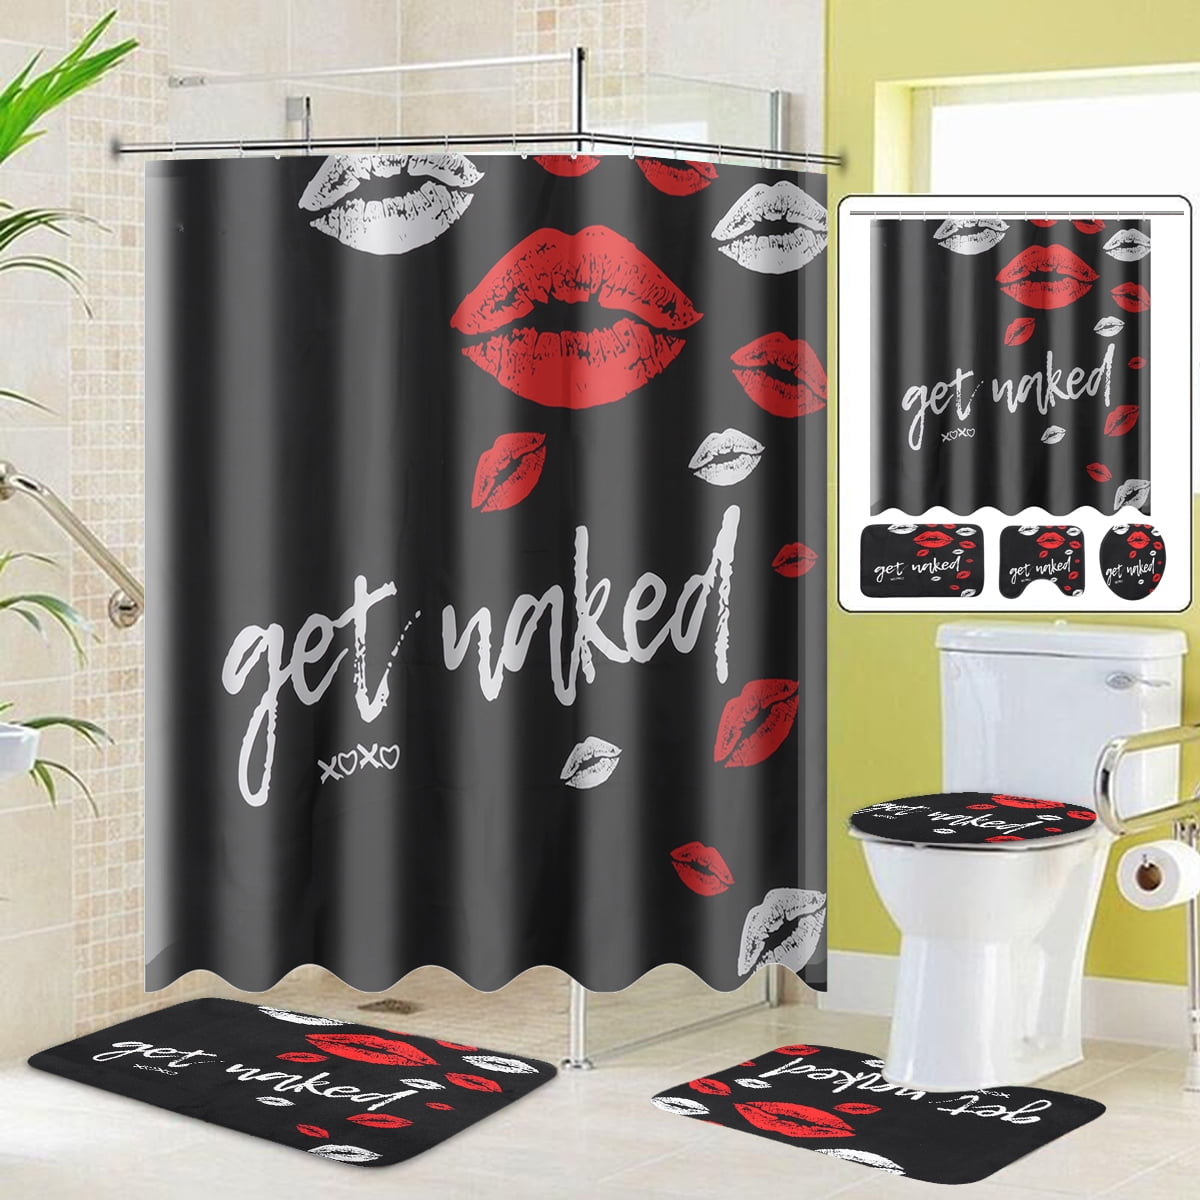 Waterproof Fabric Shower Curtain liner Bathroom mat set 71" Guitar and speakers 